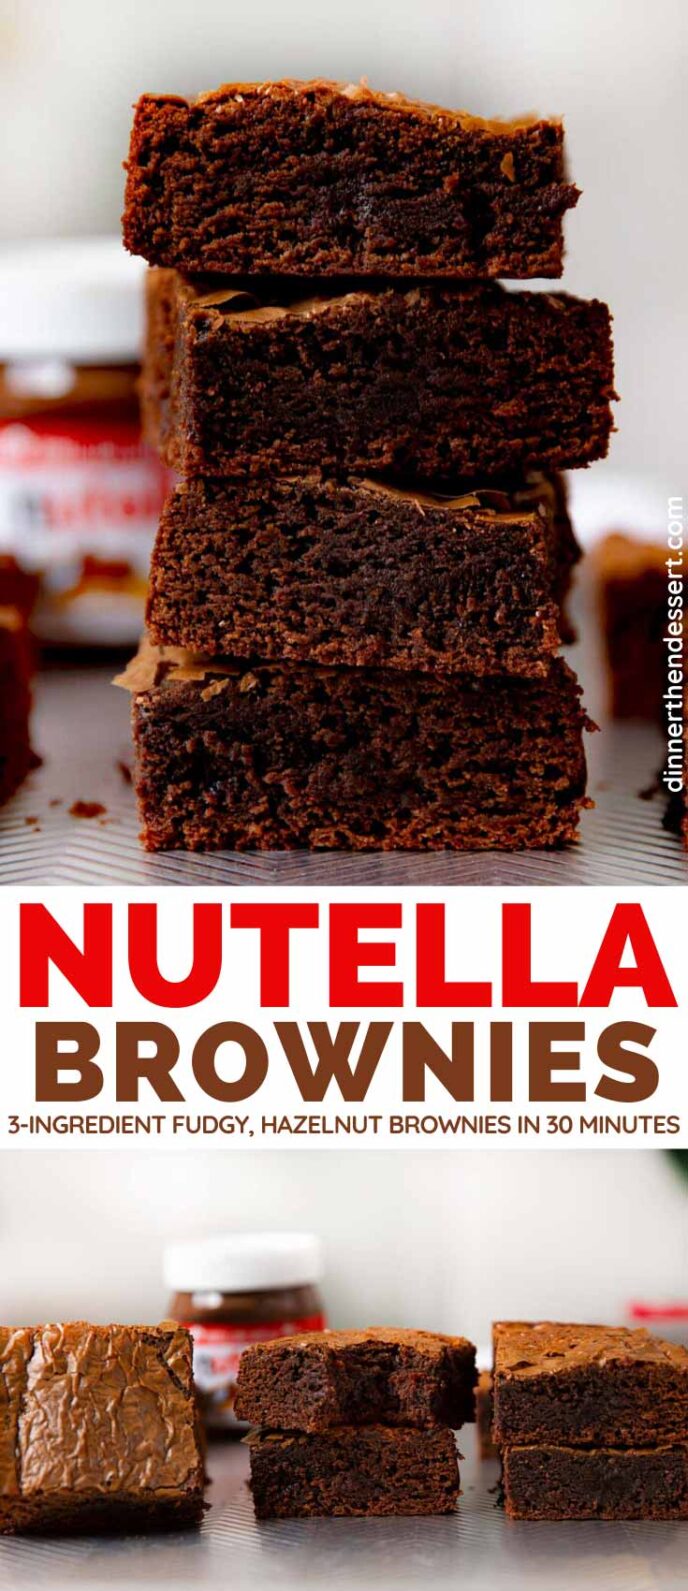 Nutella Brownies collage